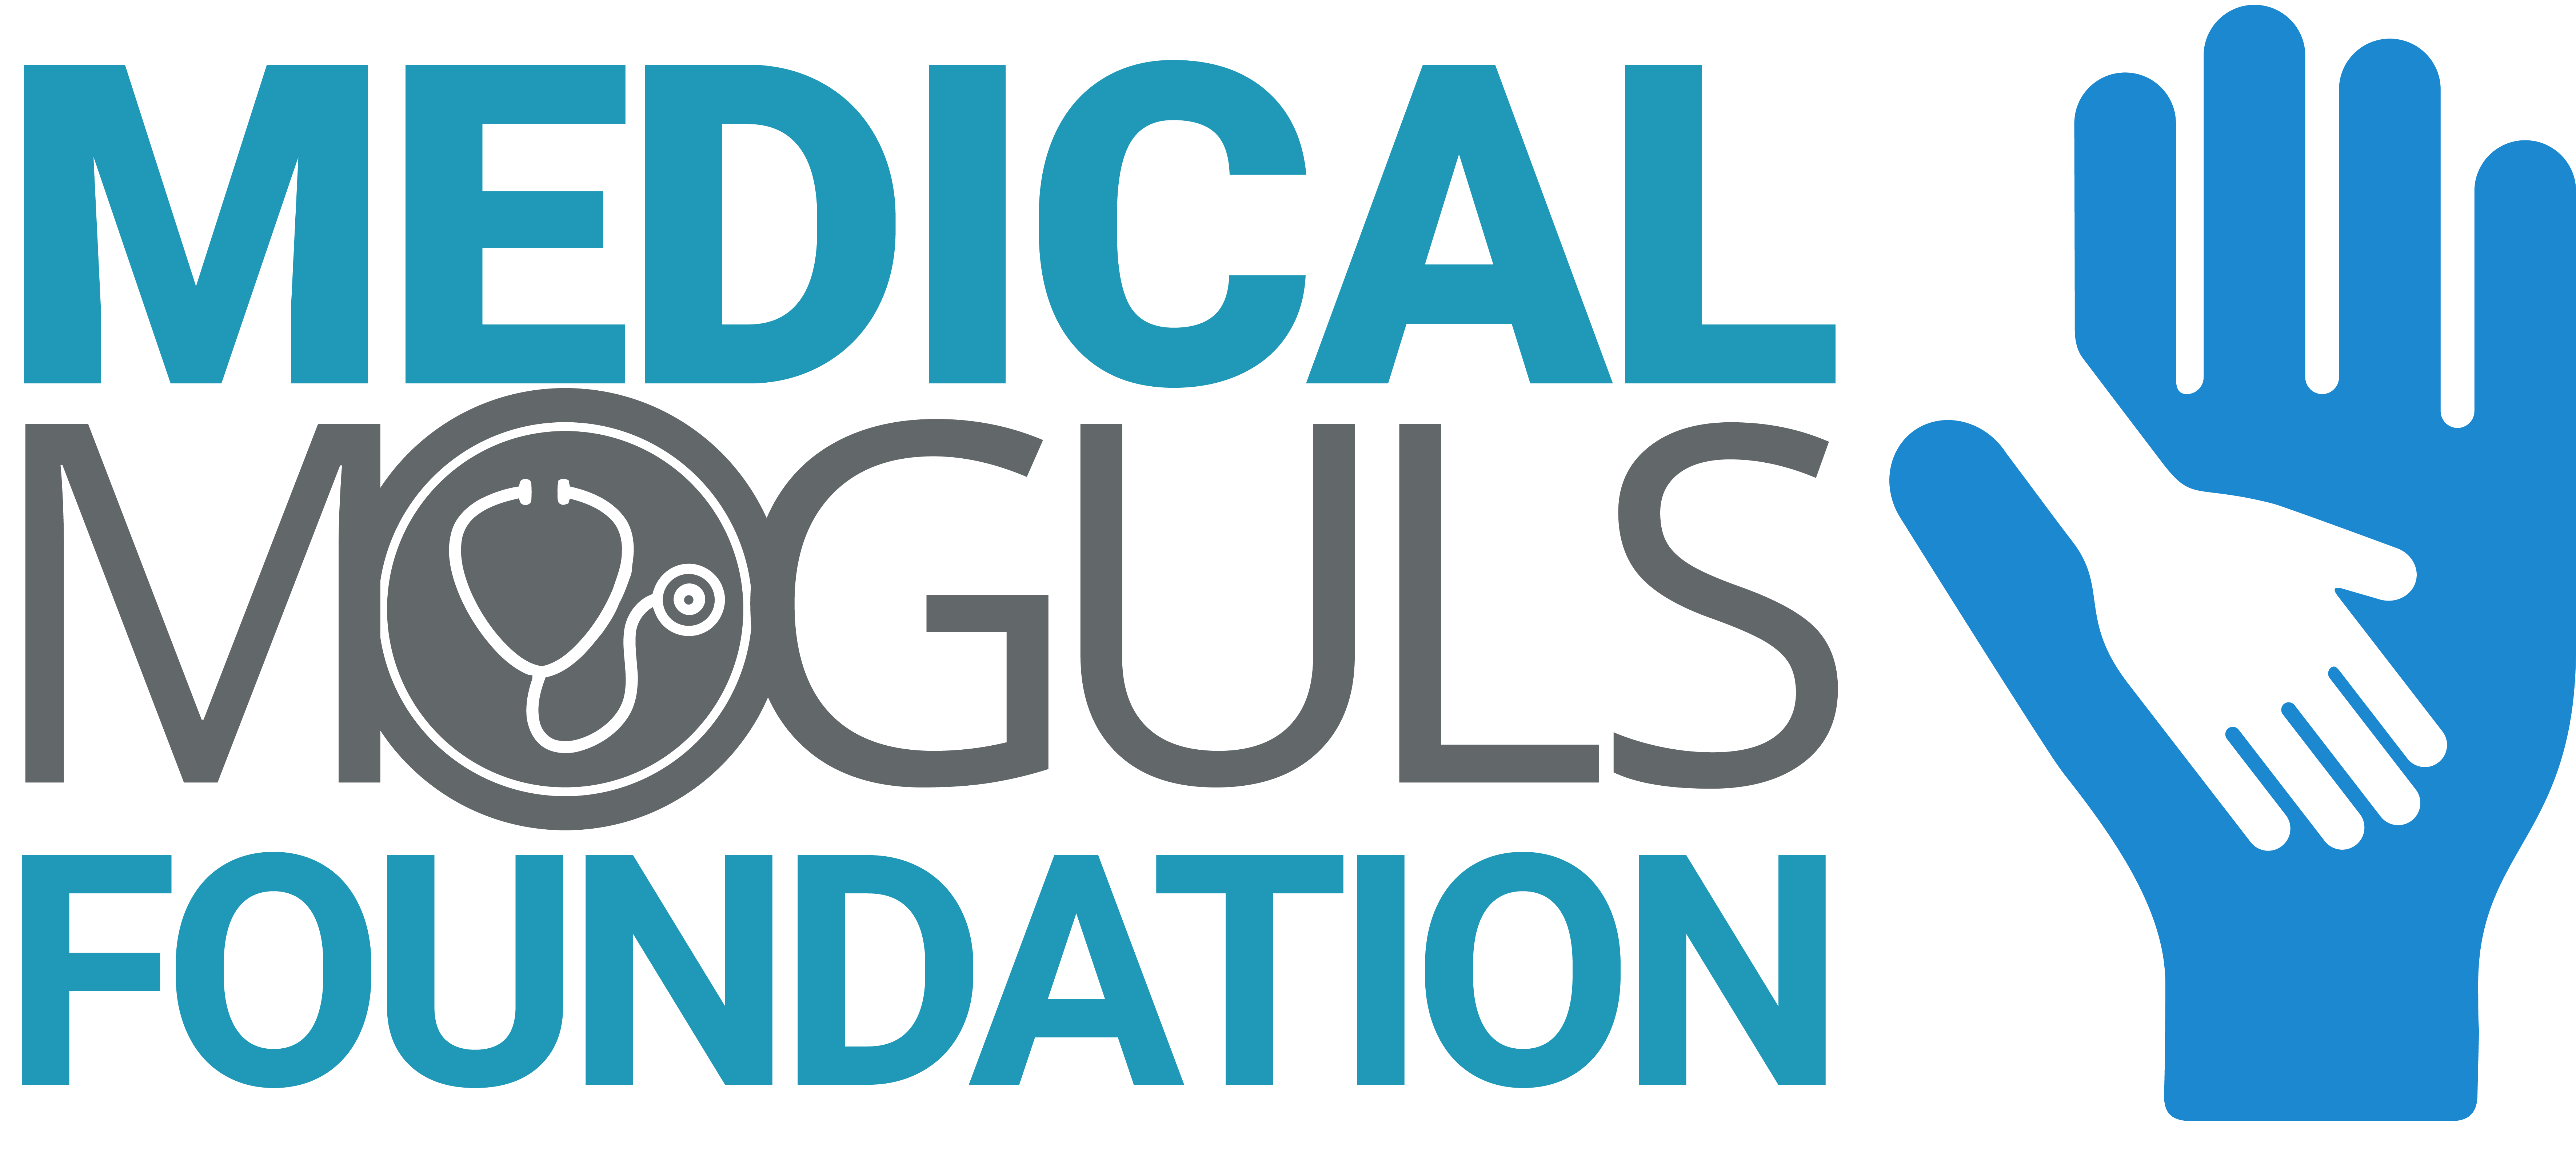 Medical-Moguls-foundation-colored